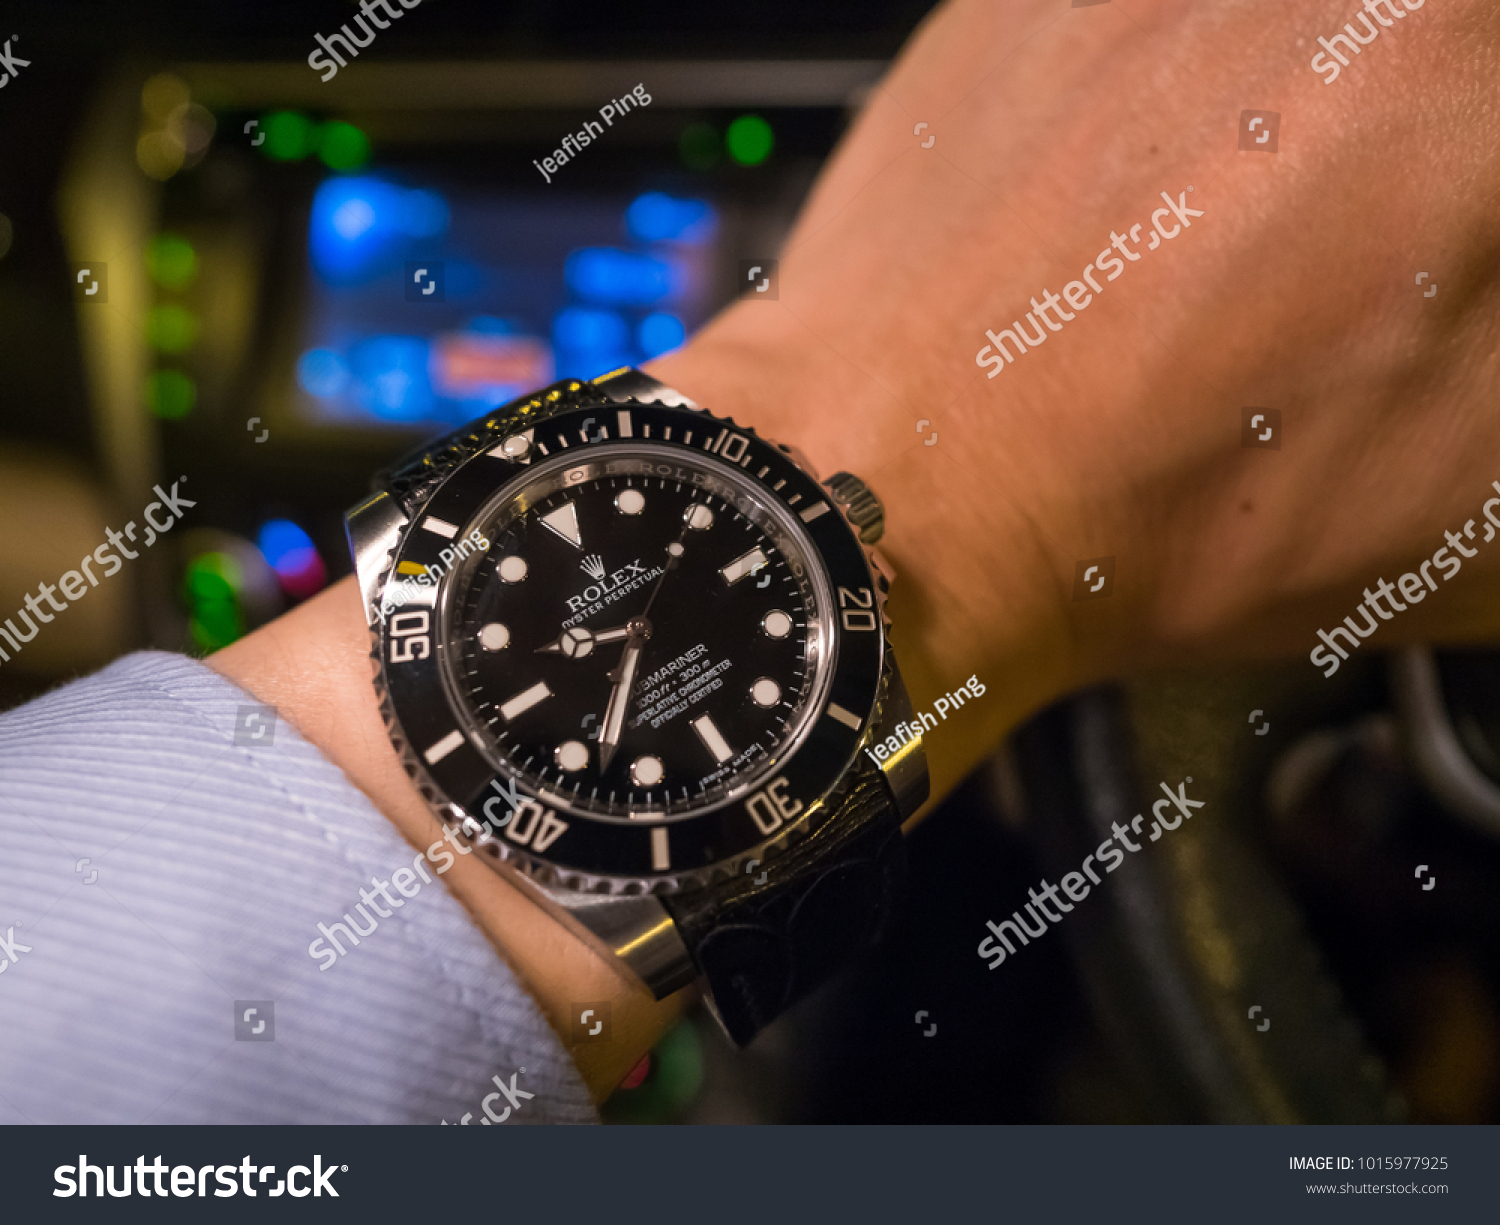 submariner no date wrist